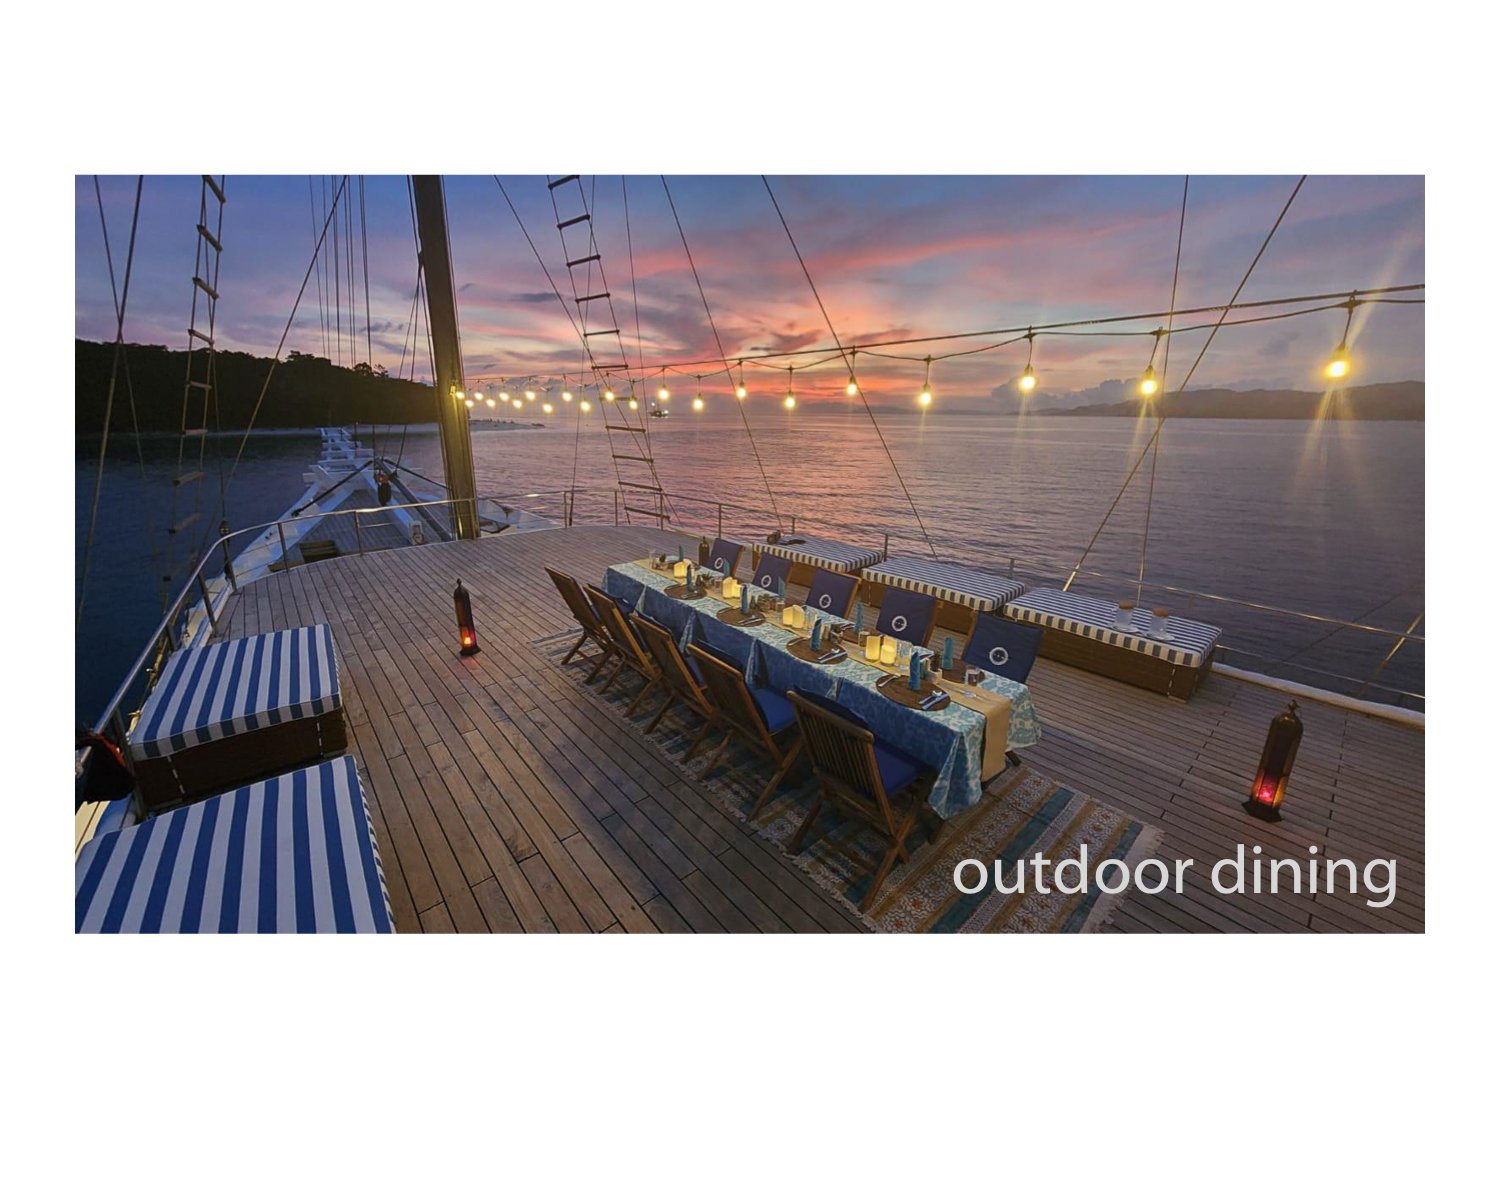 spice island_luxurious_outdoor dining.jpg